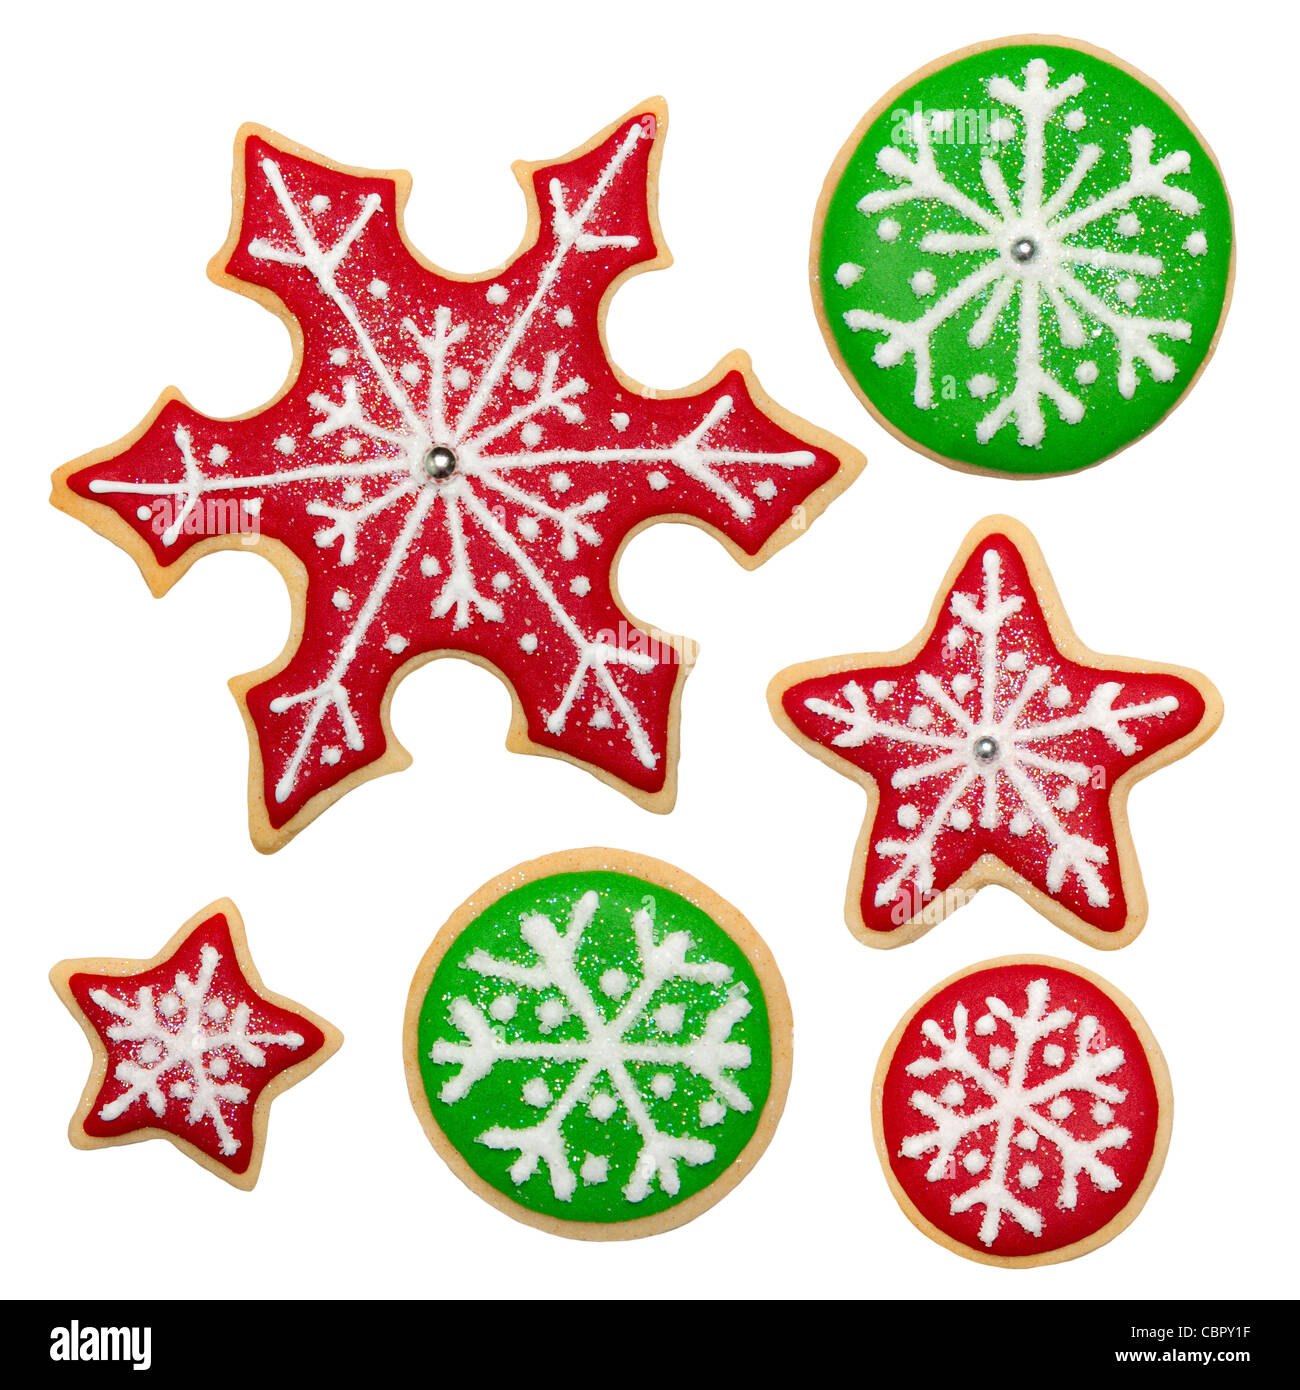 Biscuits de Noël Banque D'Images